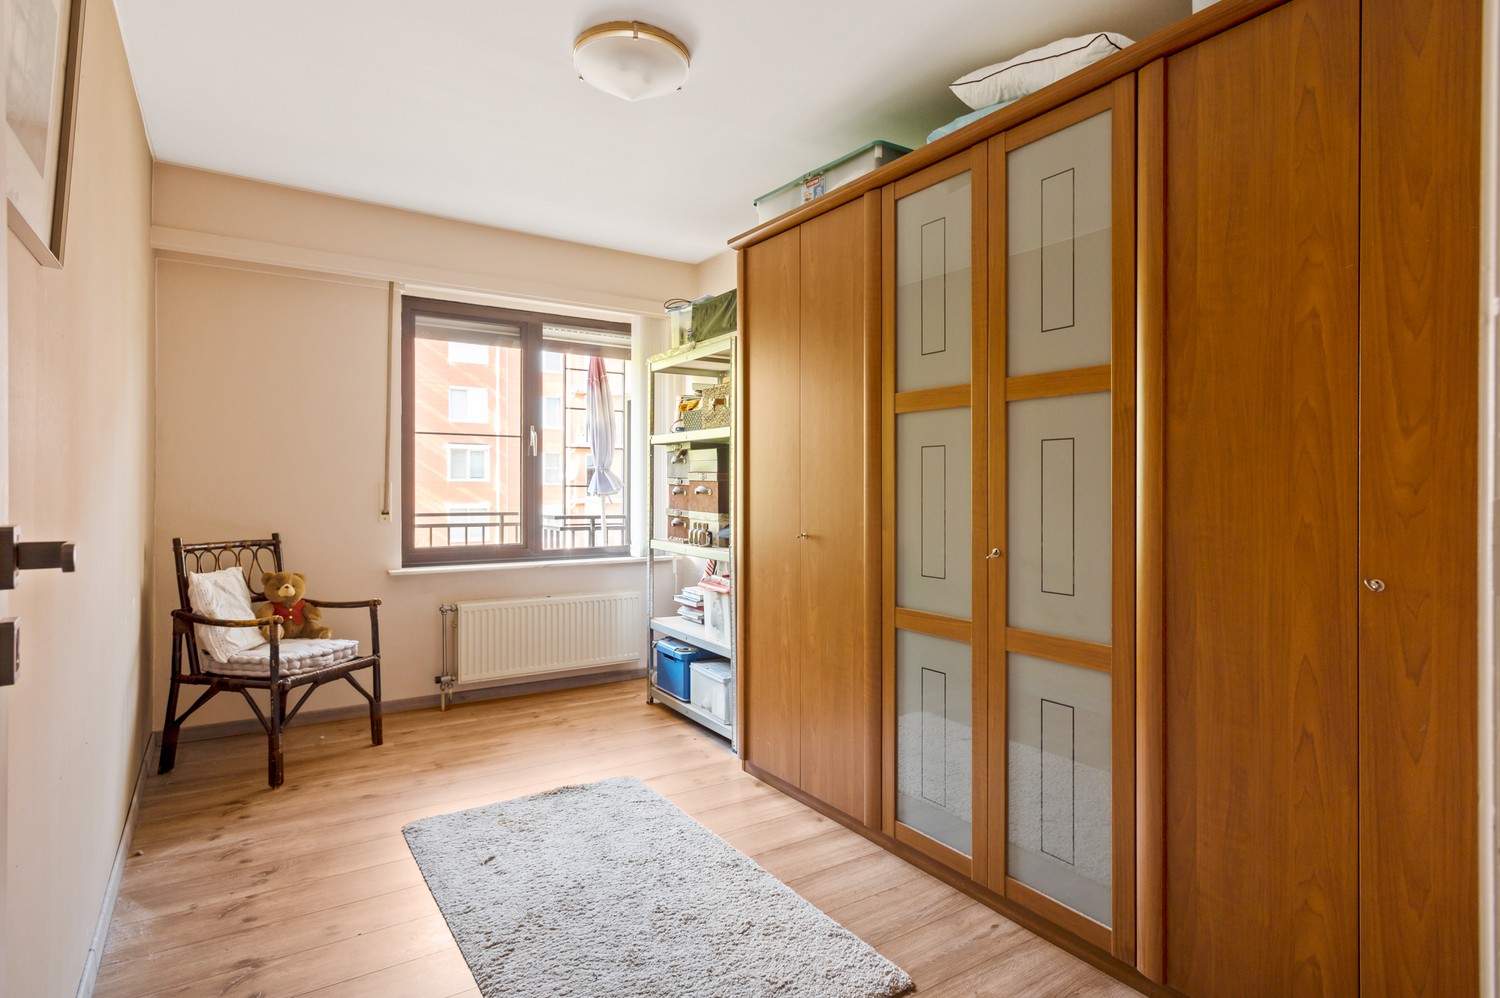 Ruim appartement met twee slaapkamers op ideale locatie in Deurne! afbeelding 15